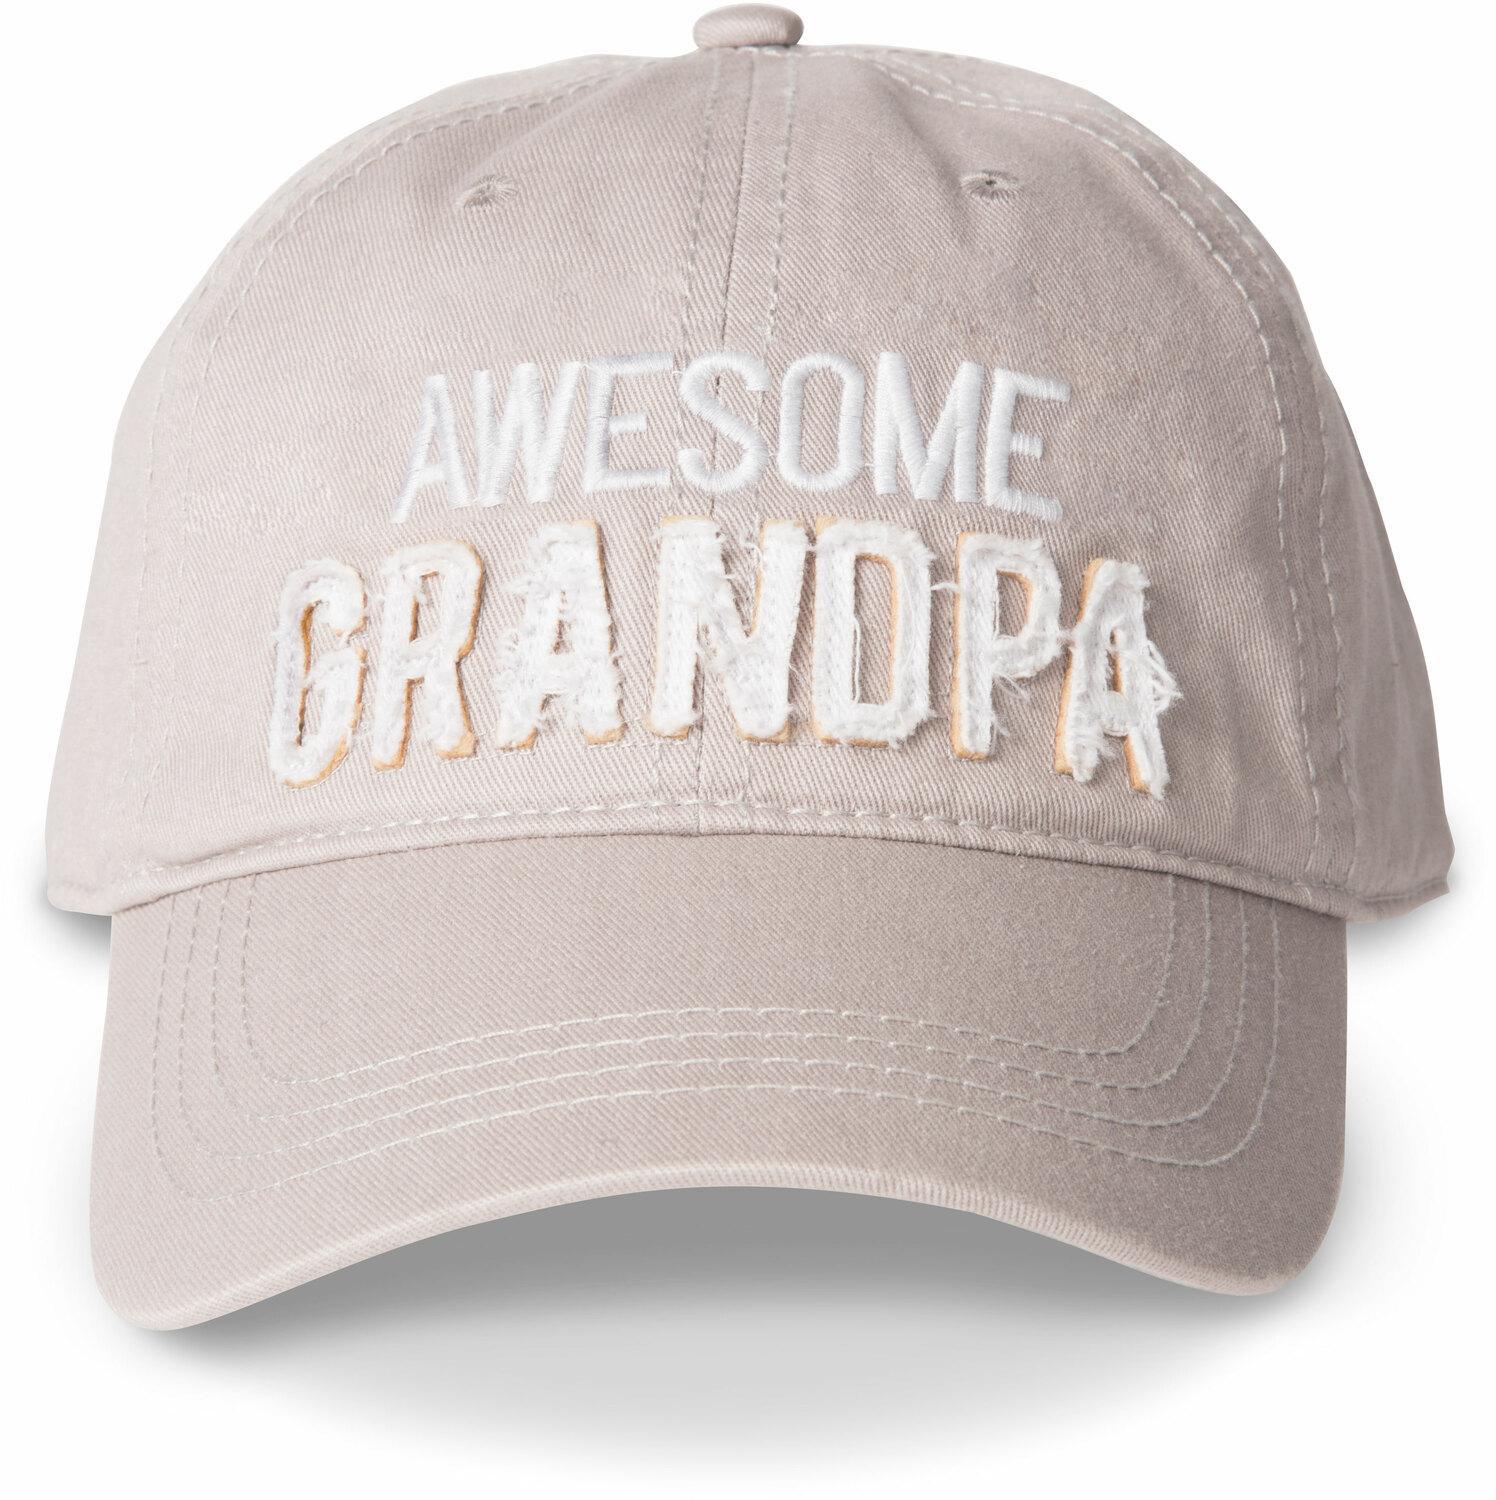 Awesome Grandpa Hat